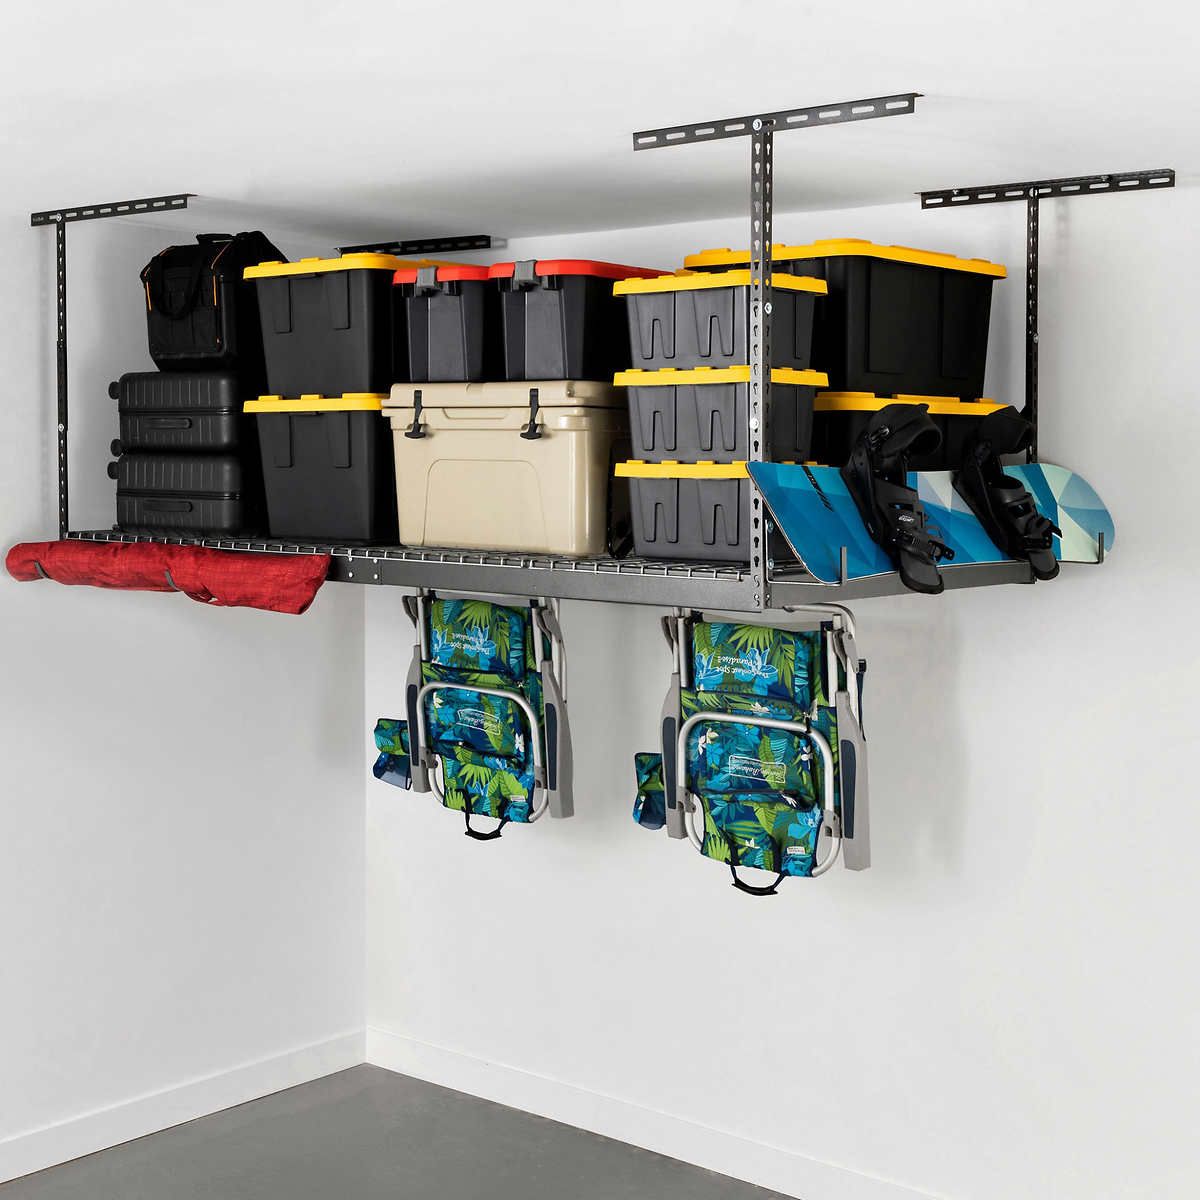 Overhead Garage Storage Rack, Installing Wire Shelving In Garage